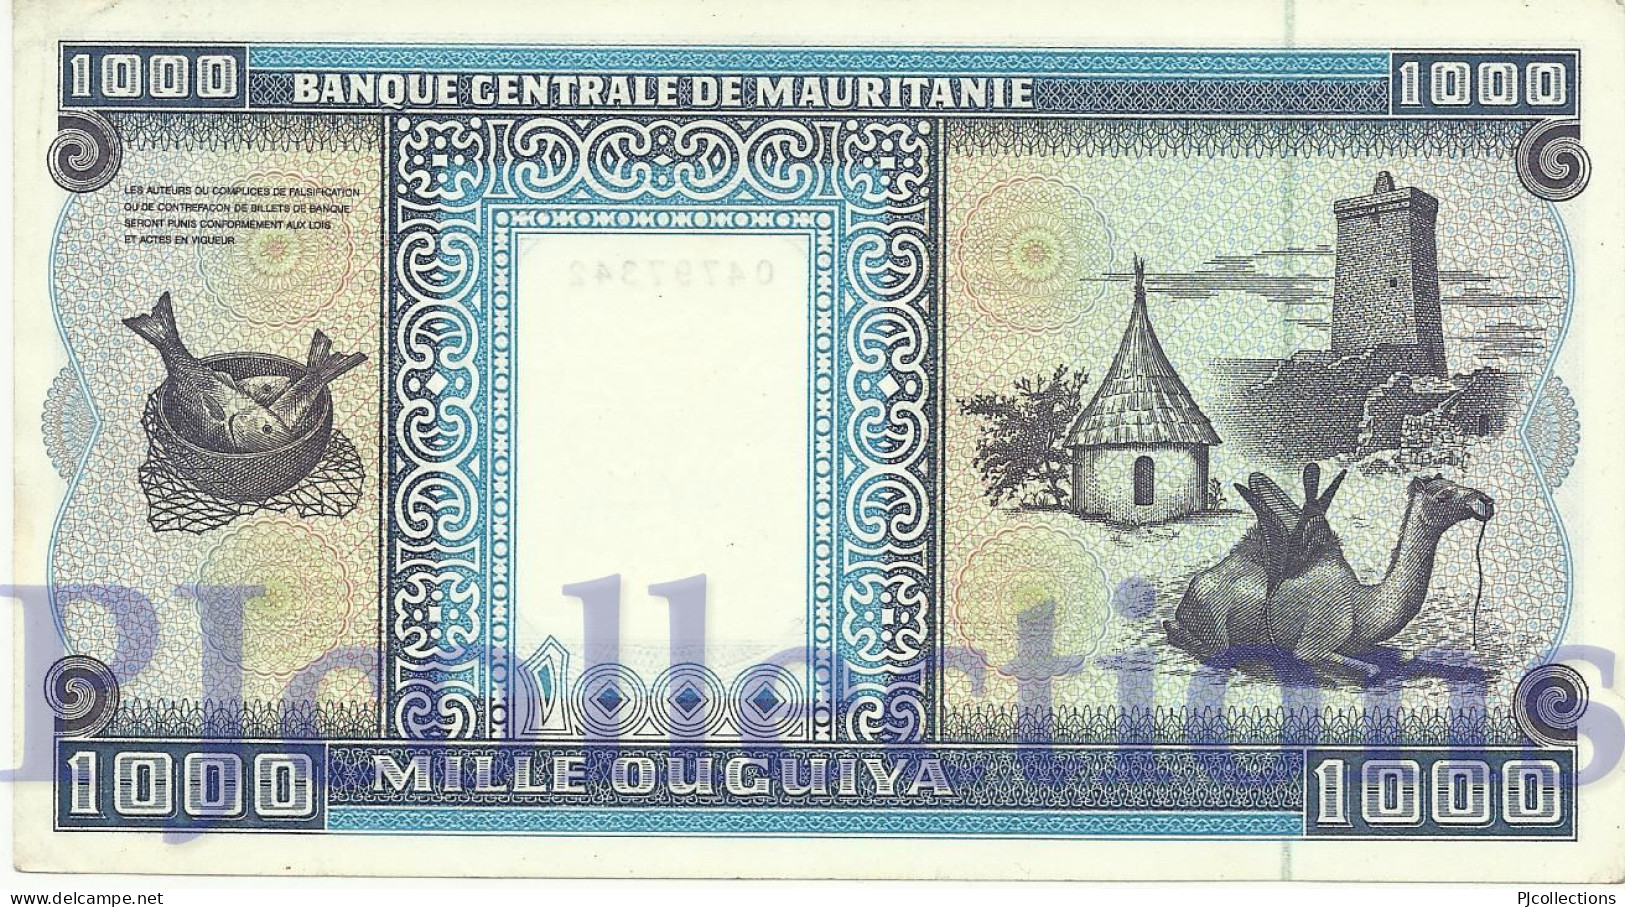 MAURITANIA 1000 OUGUIYA 2002 PICK 9c XF/AU - Mauritanie